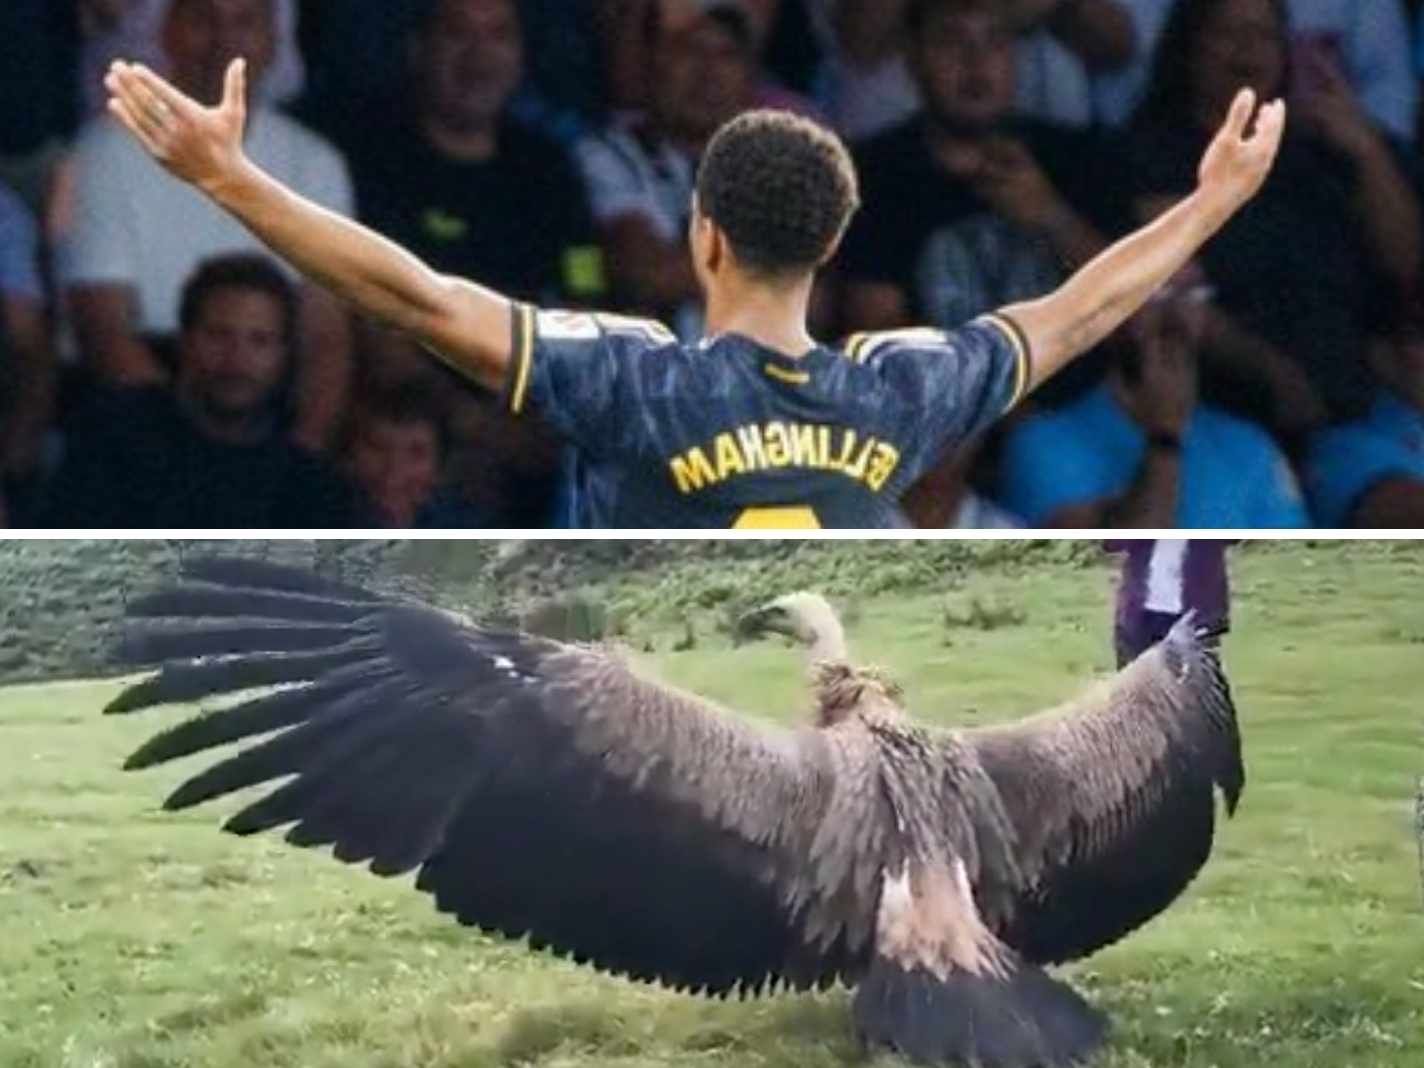 California Condor or Jude Bellingham? Fans Spot Uncanny Resemblance